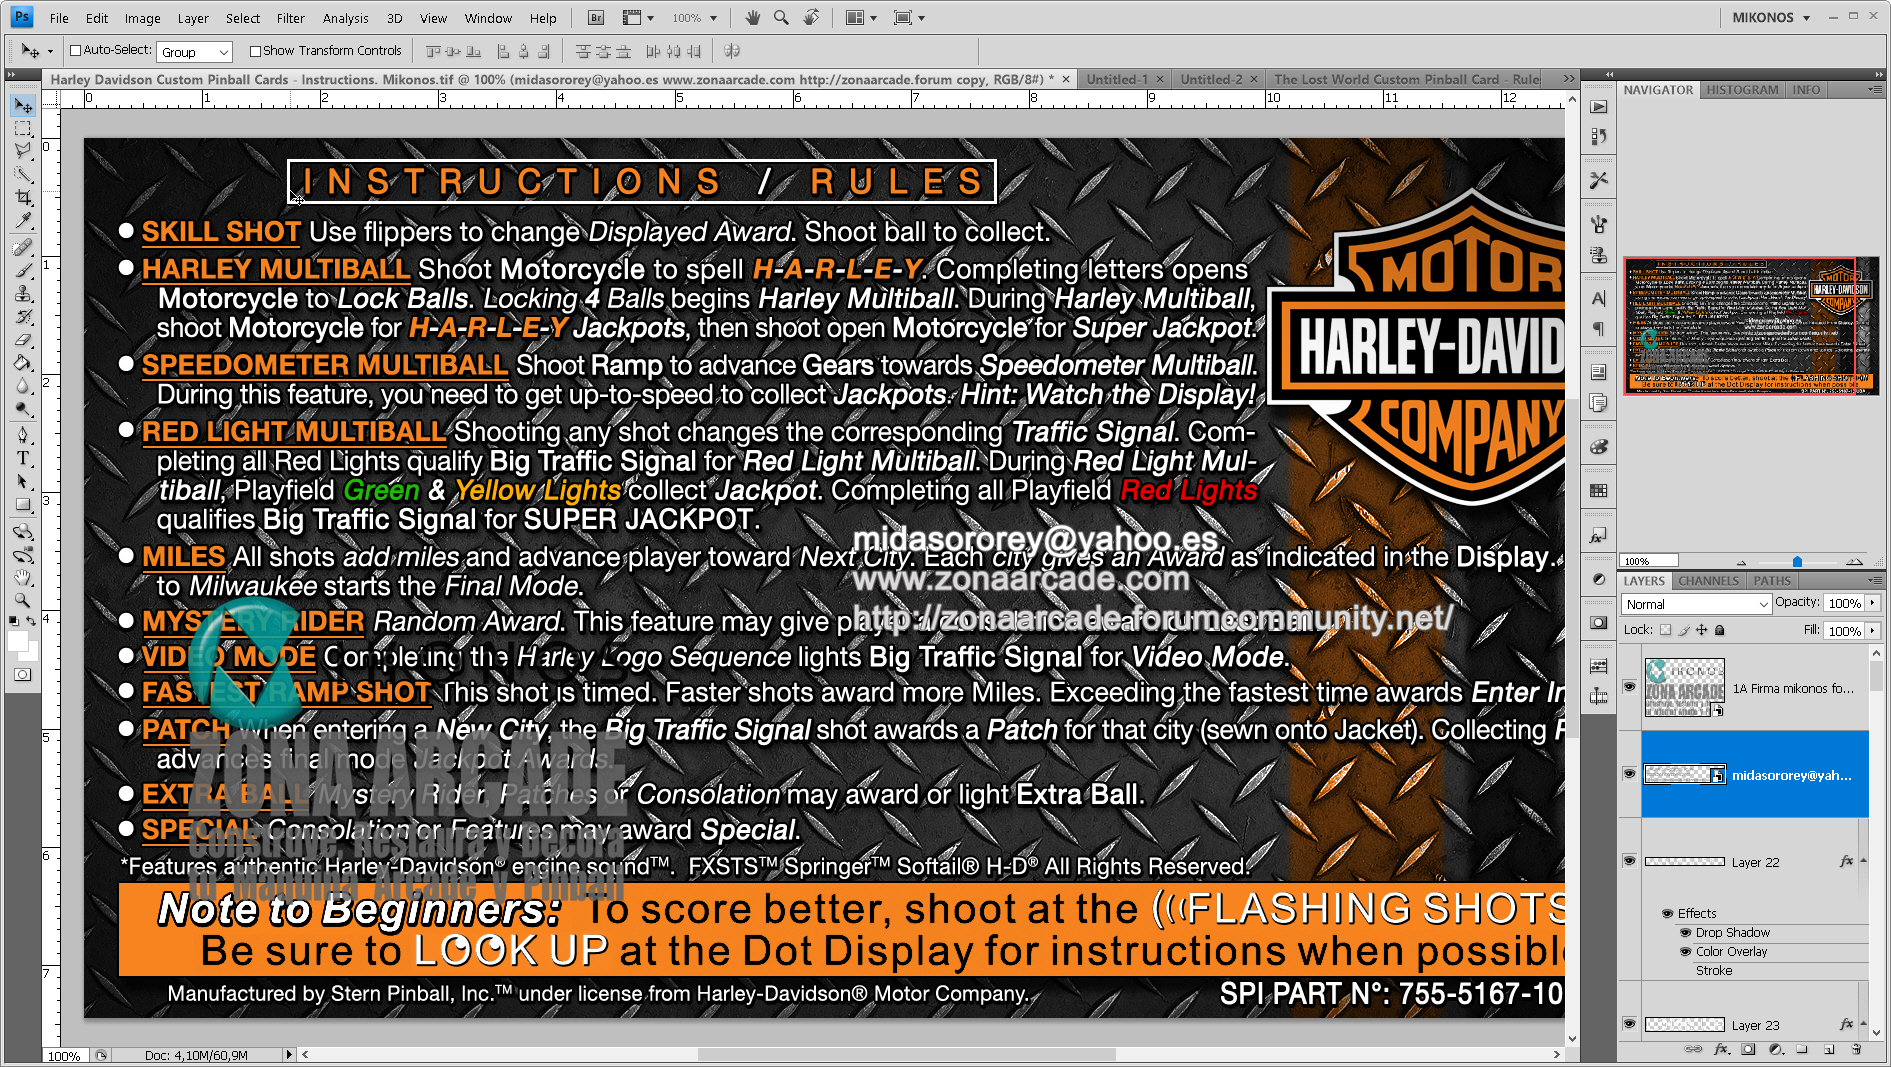 Harley Davidson Custom Pinball Card - Rules. Mikonos2